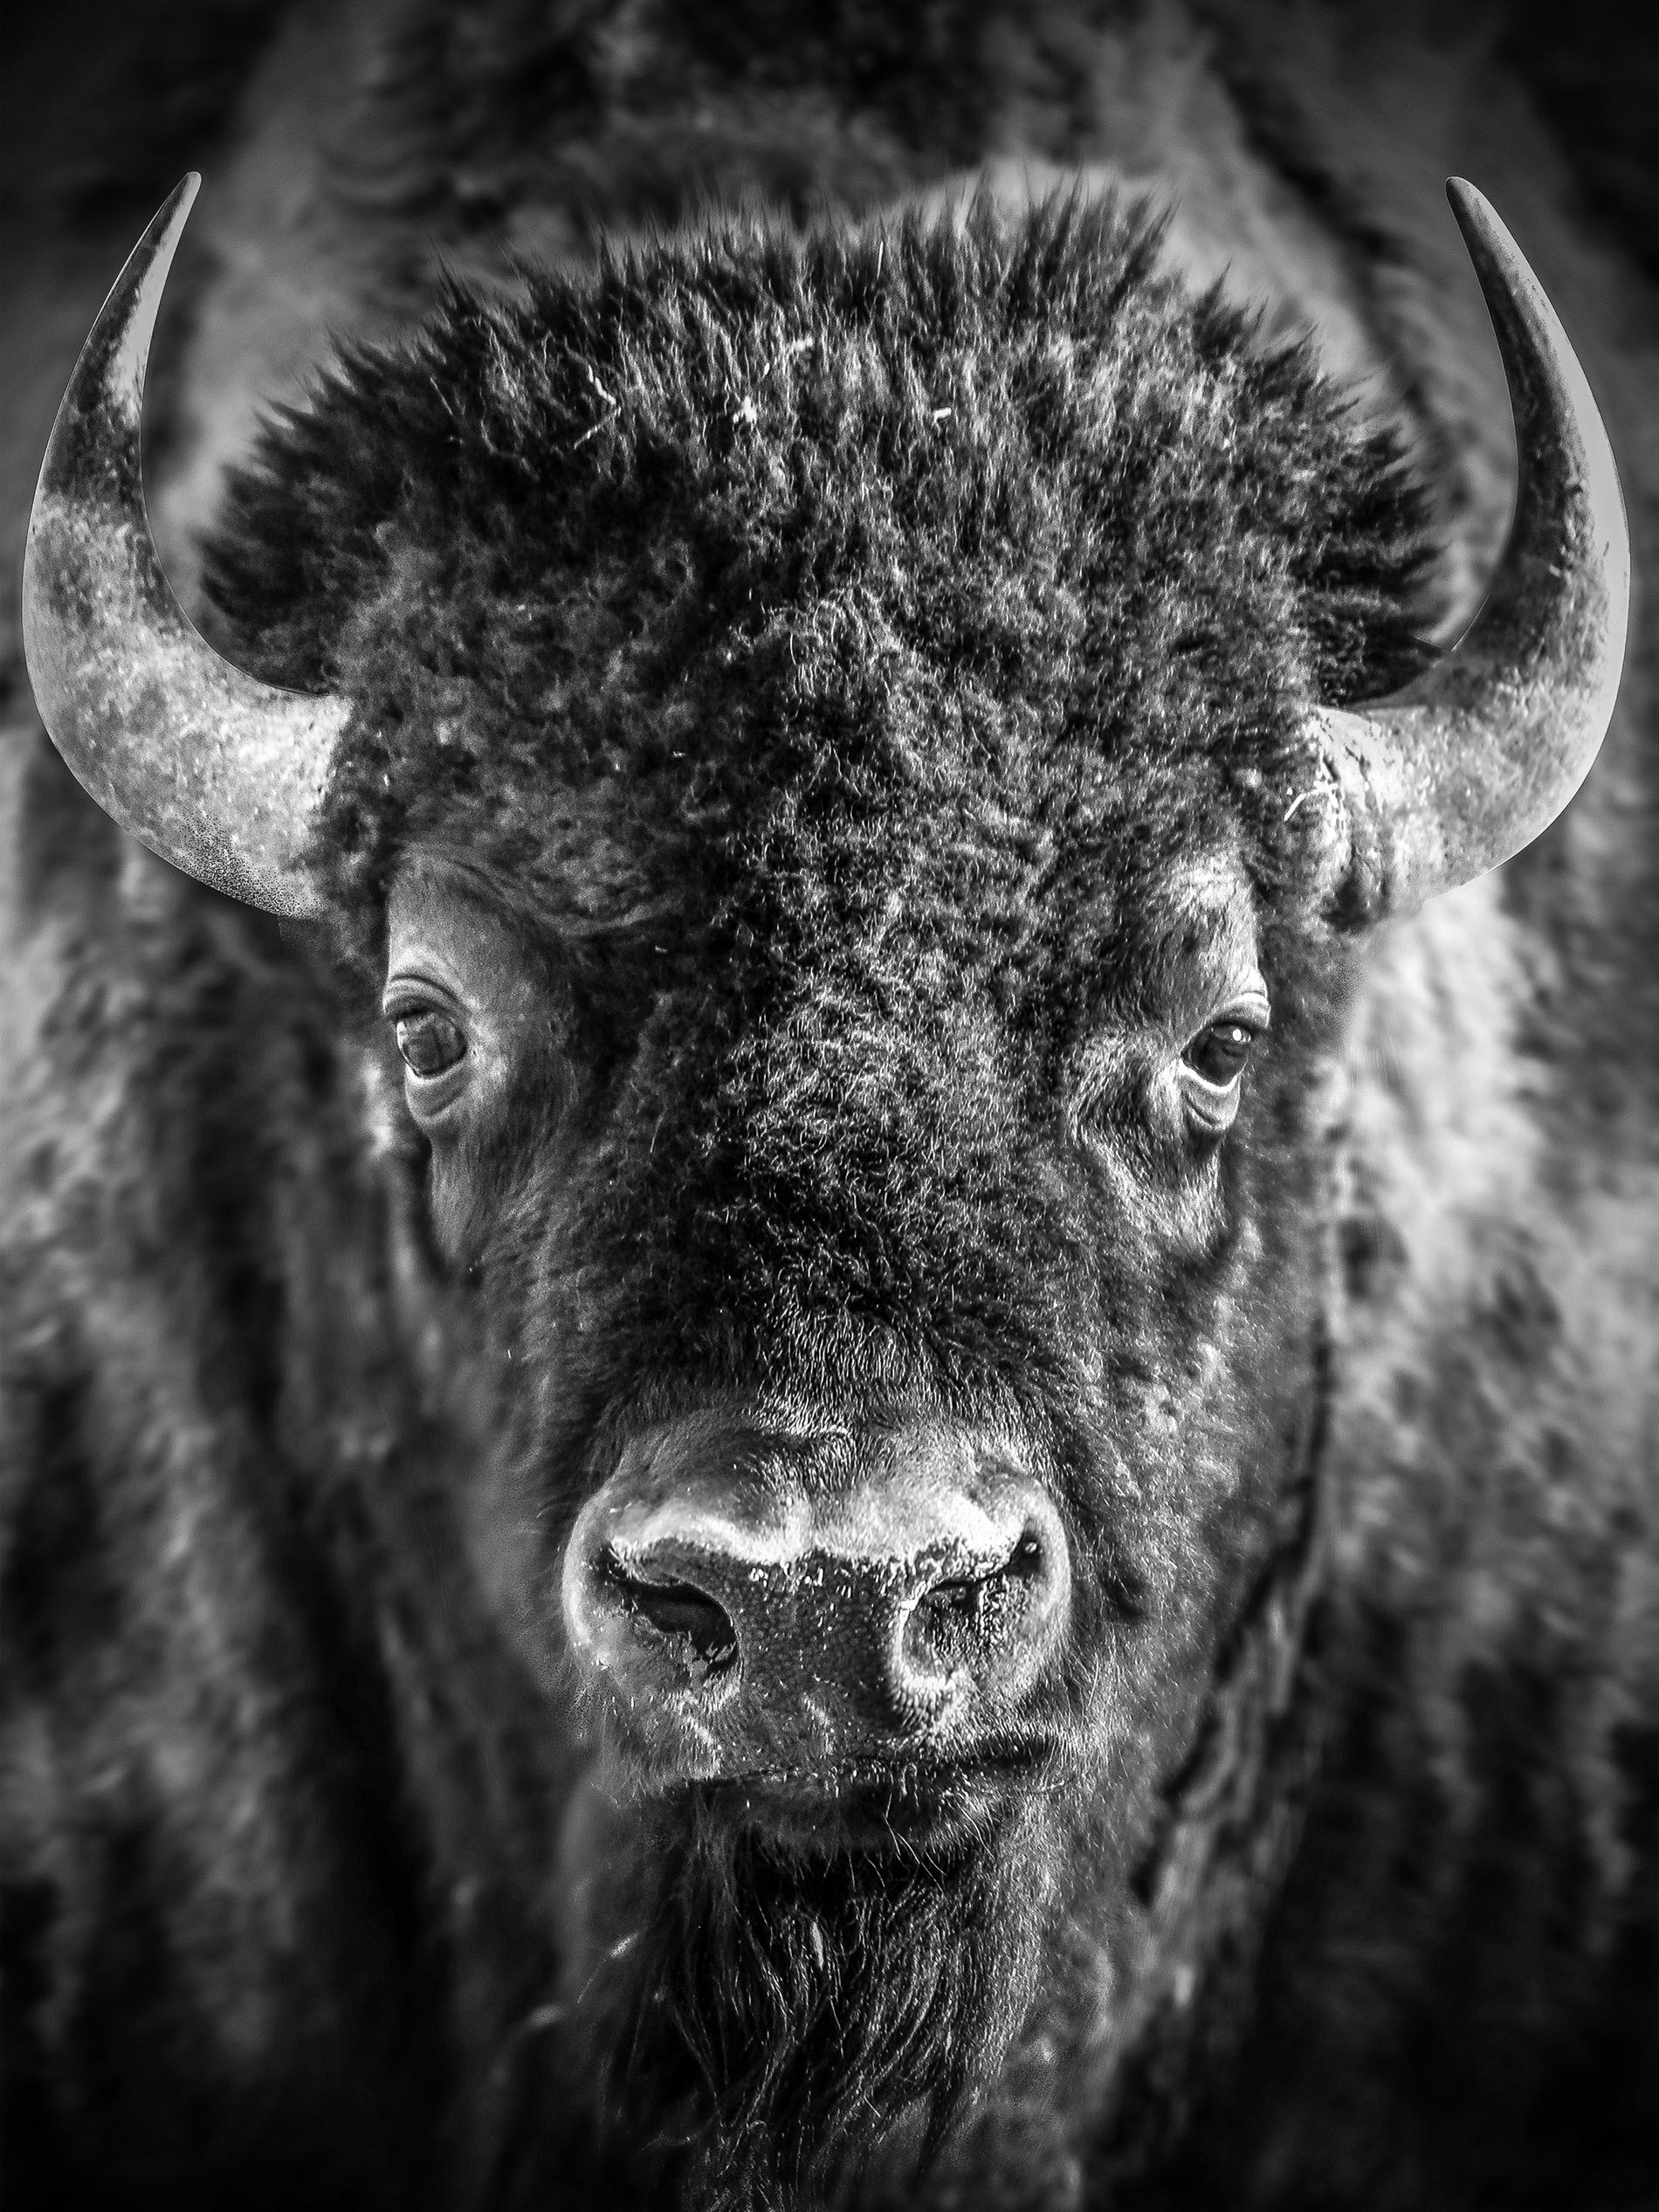 Shane Russeck Landscape Photograph -  "Bison Portrait" 20x30 - Black & White Photography, Buffalo, Wyoming